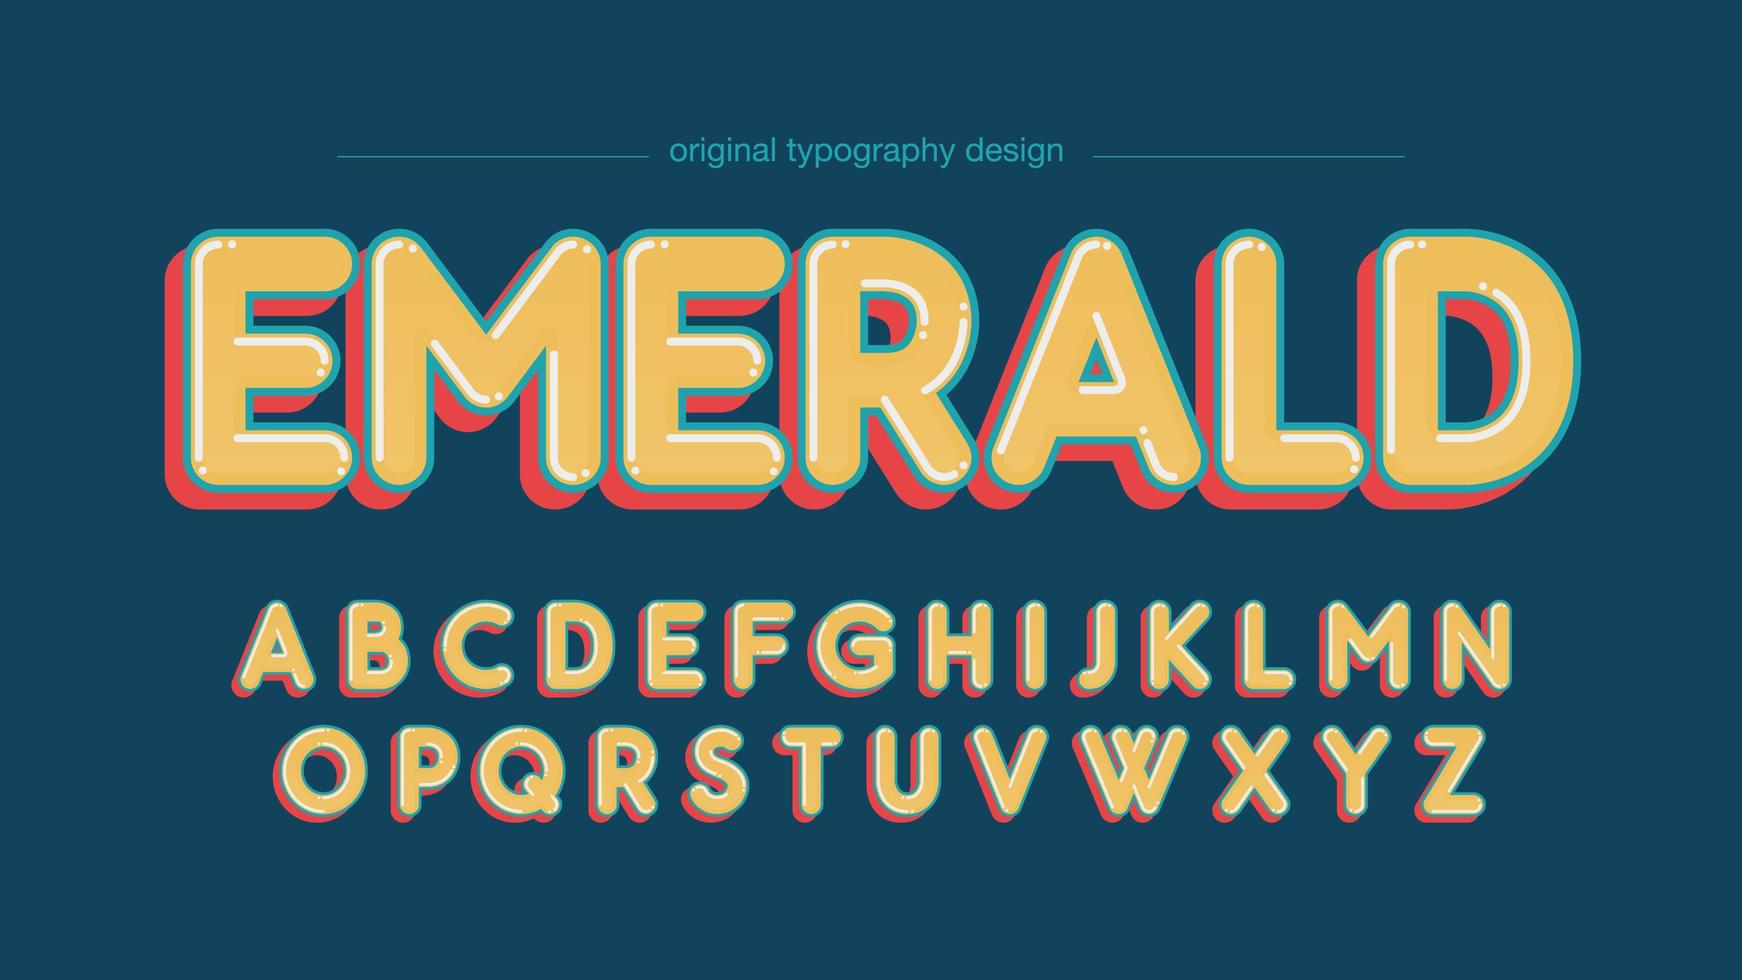 Afgeronde vetgedrukte grappige gele artistieke lettertype vector